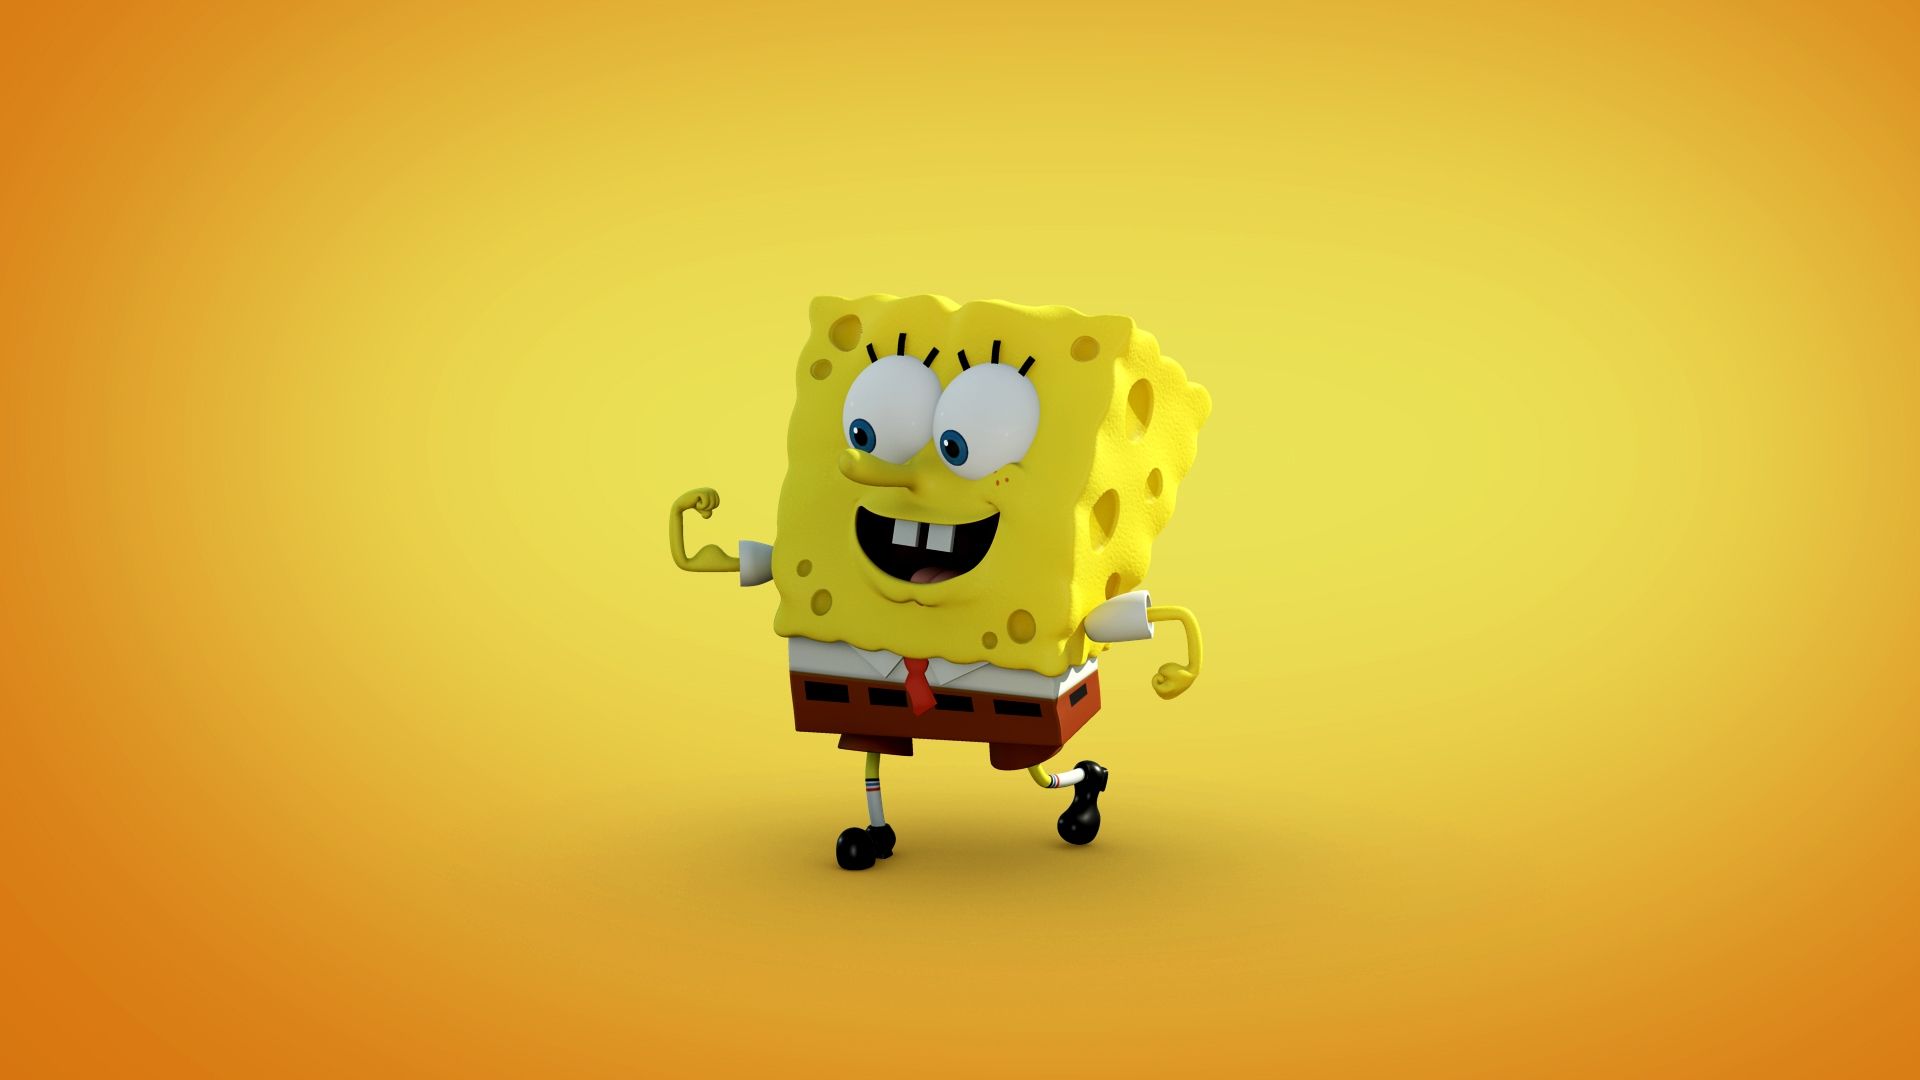 SpongeBob Wallpaper 4k free download